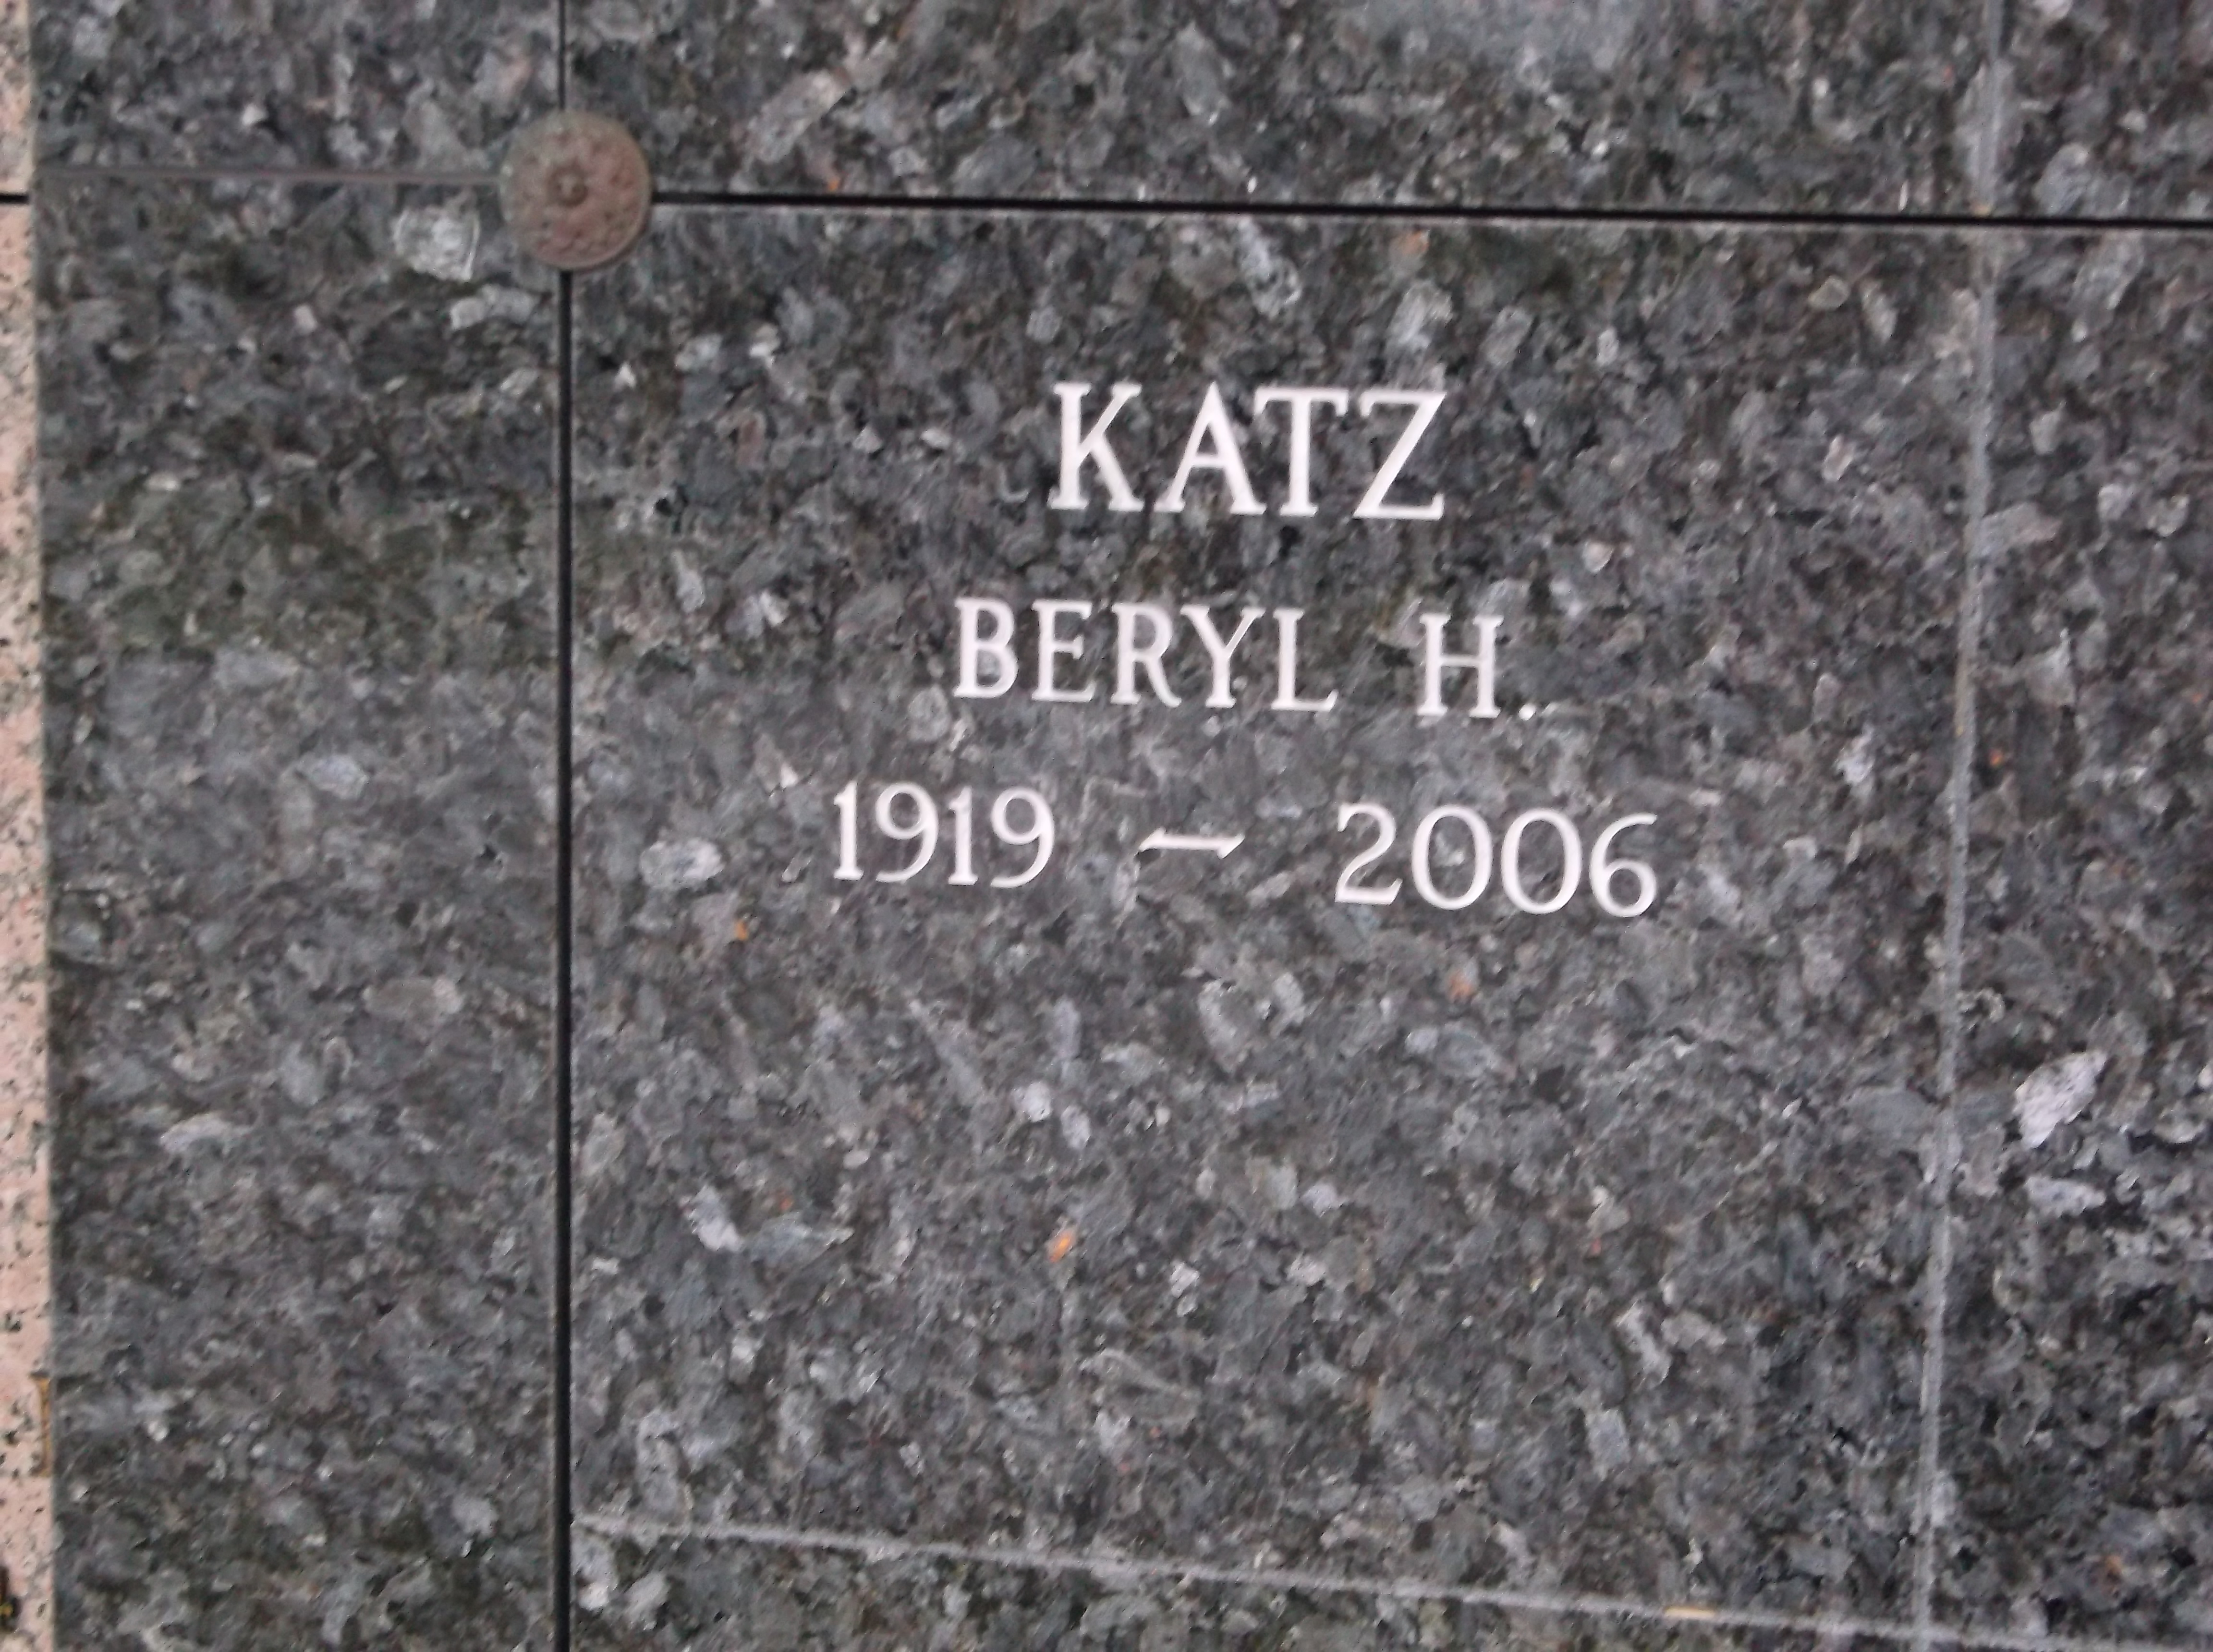 Beryl H Katz